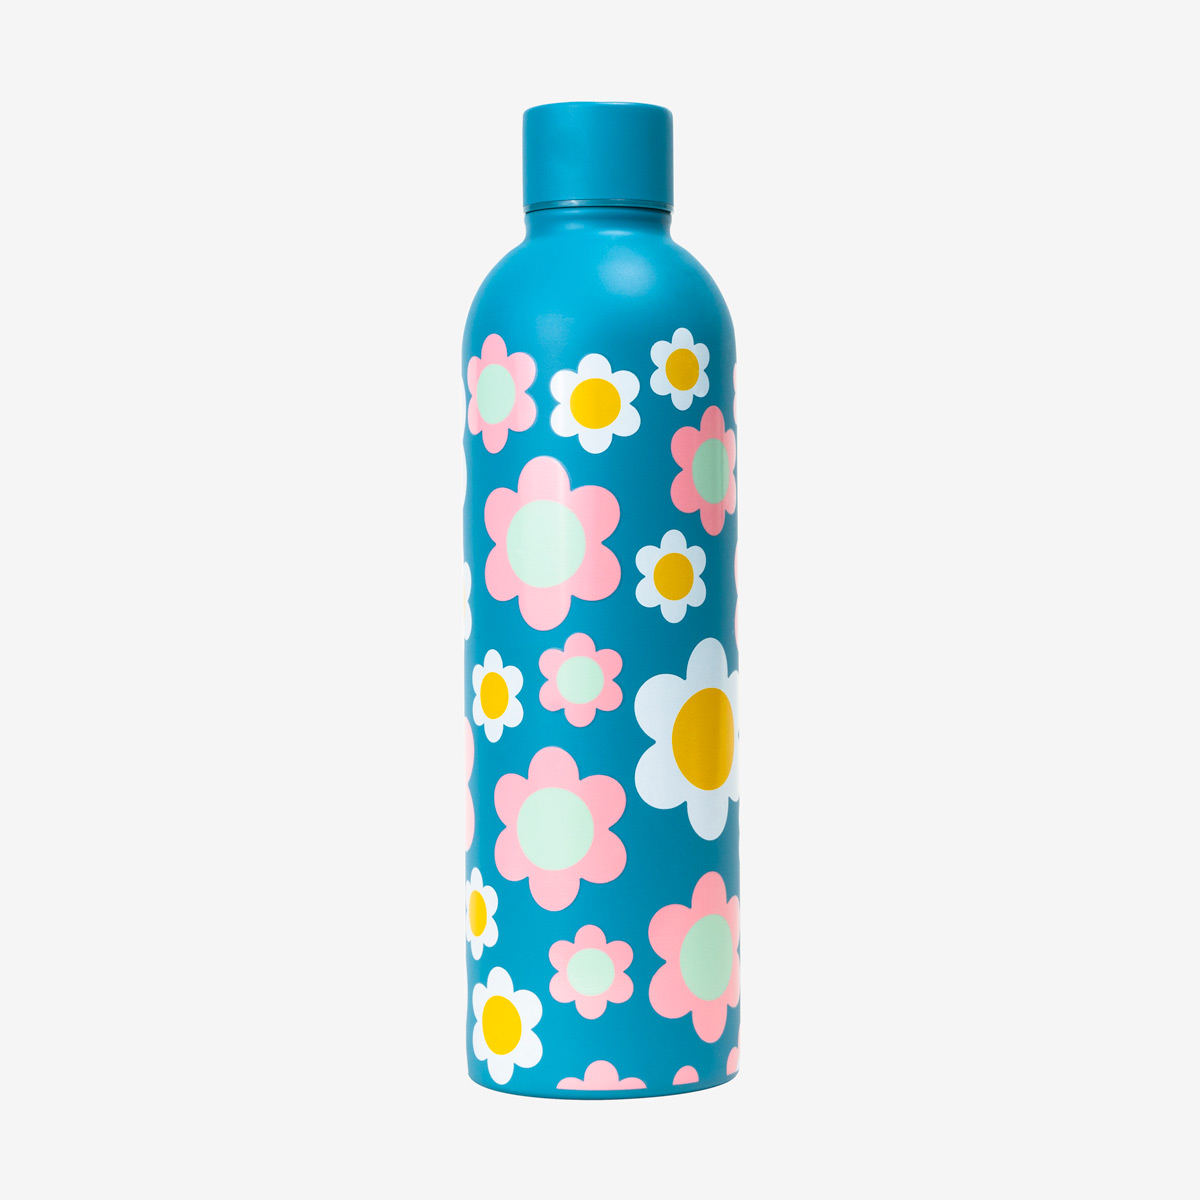 Hard Rock Music Festival Flower Power Water Bottle in Blue image number 1